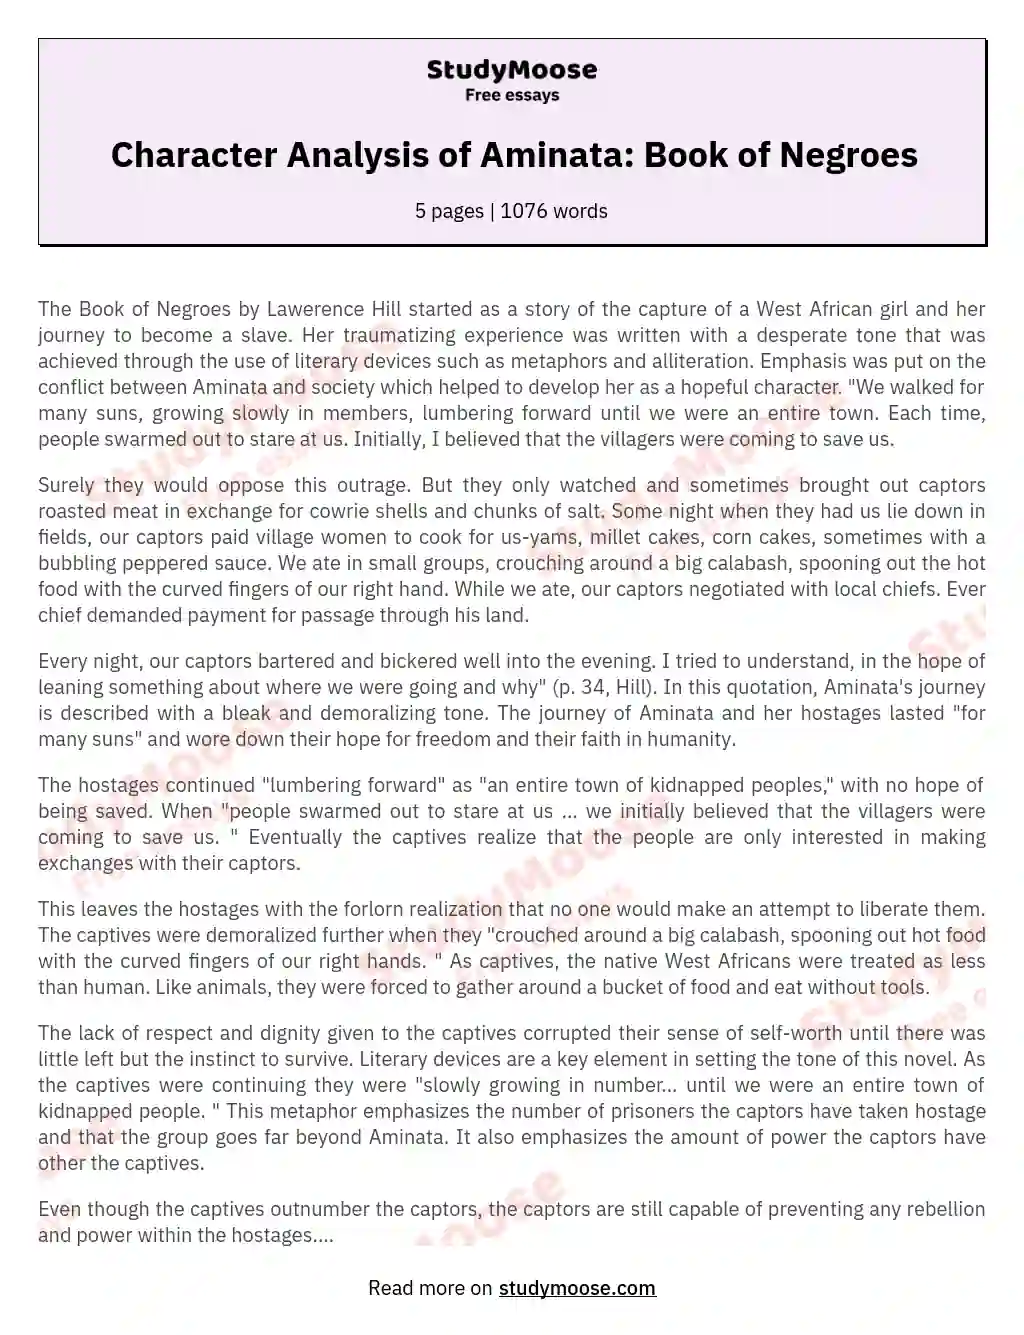 Character Analysis of Aminata: Book of Negroes essay